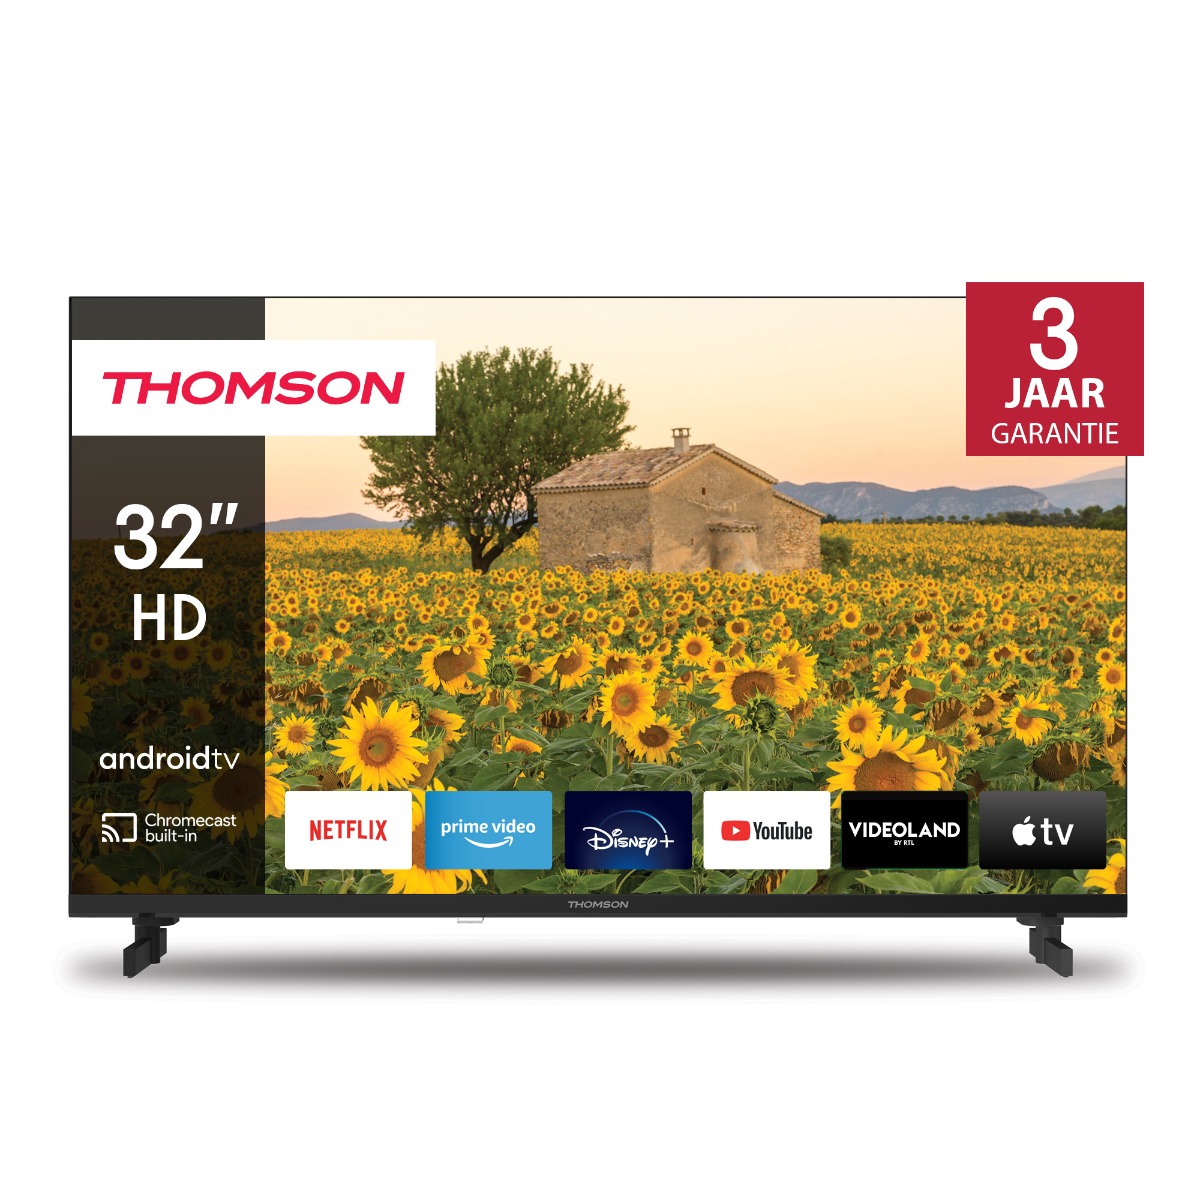 Thomson - Smart Android TV HD - 32HA2S13